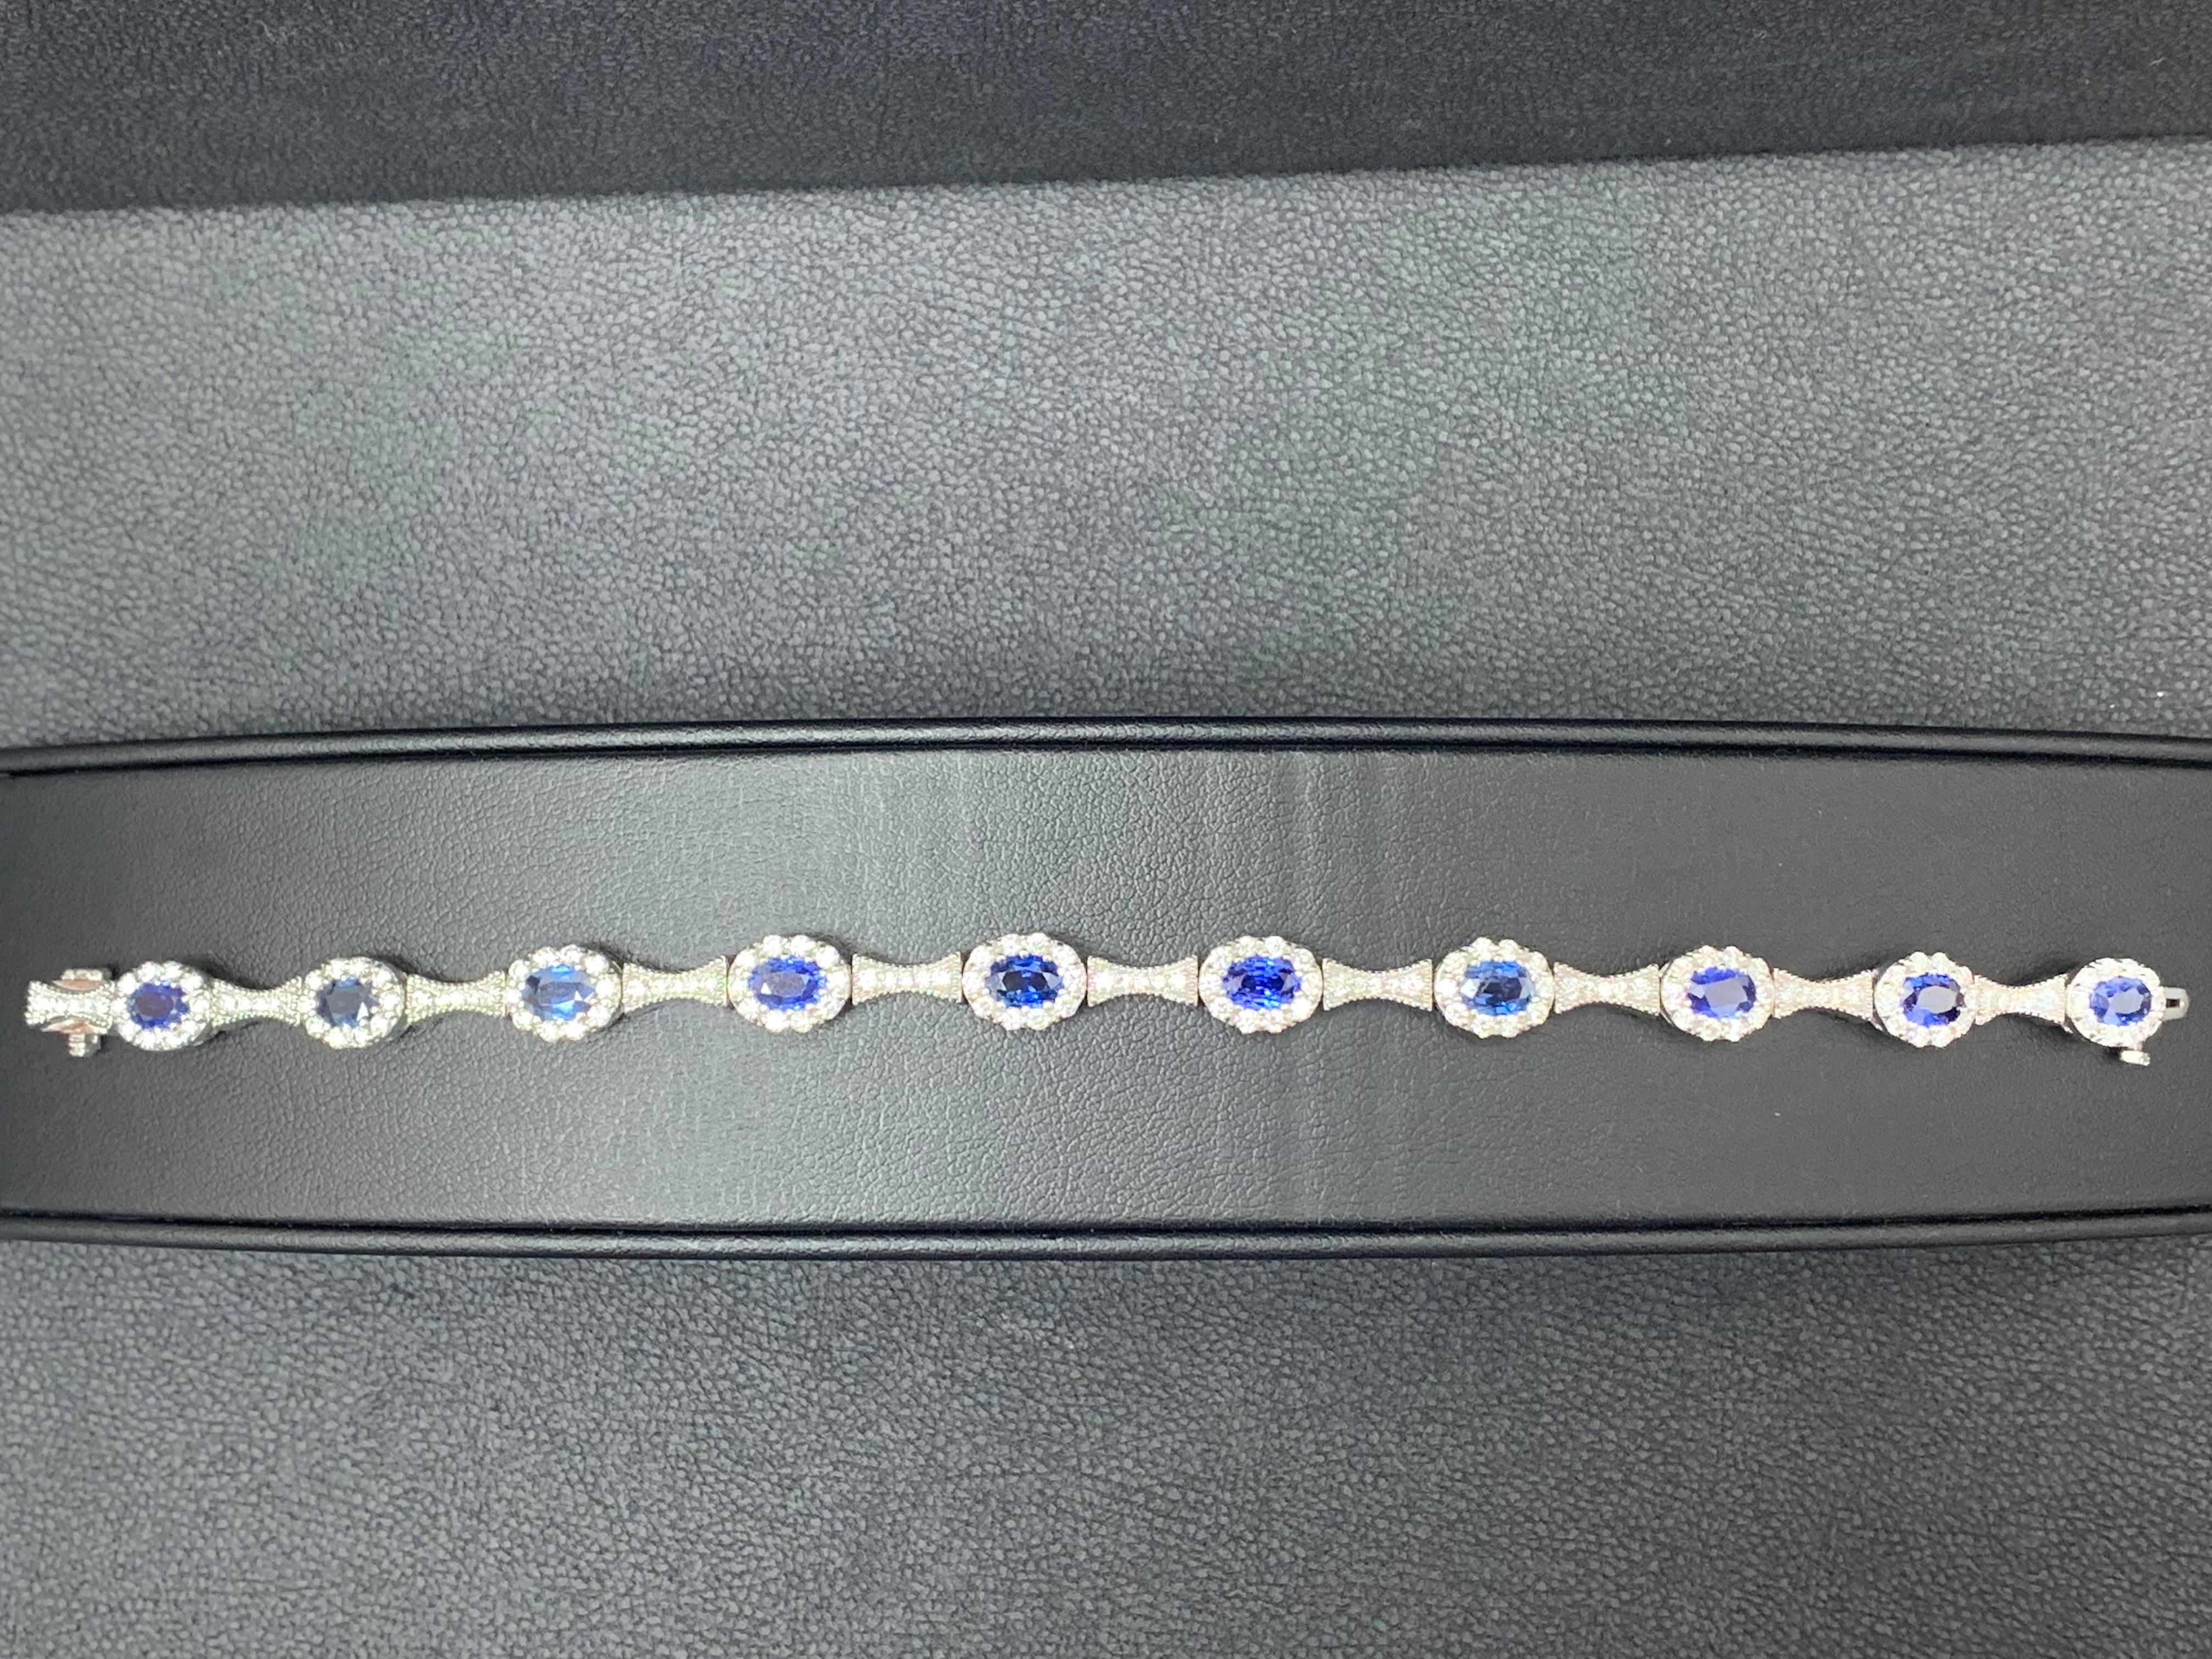 6.19 Carat Oval Cut Blue Sapphire Diamond Bracelet in 14K White Gold For Sale 1